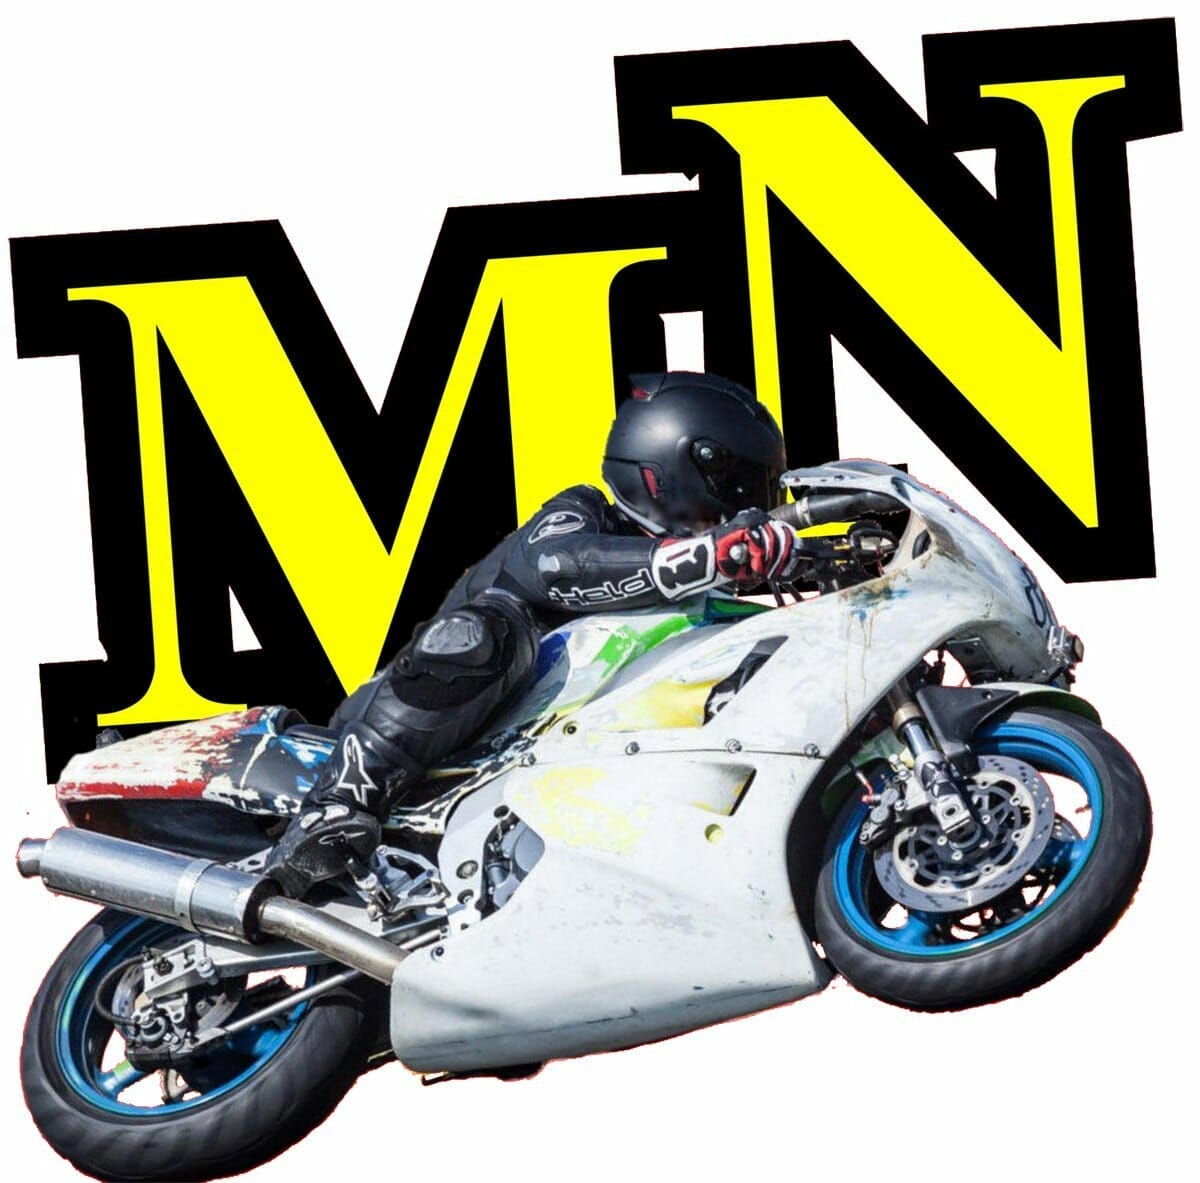 Honda CB300R via @motorradnachrichten